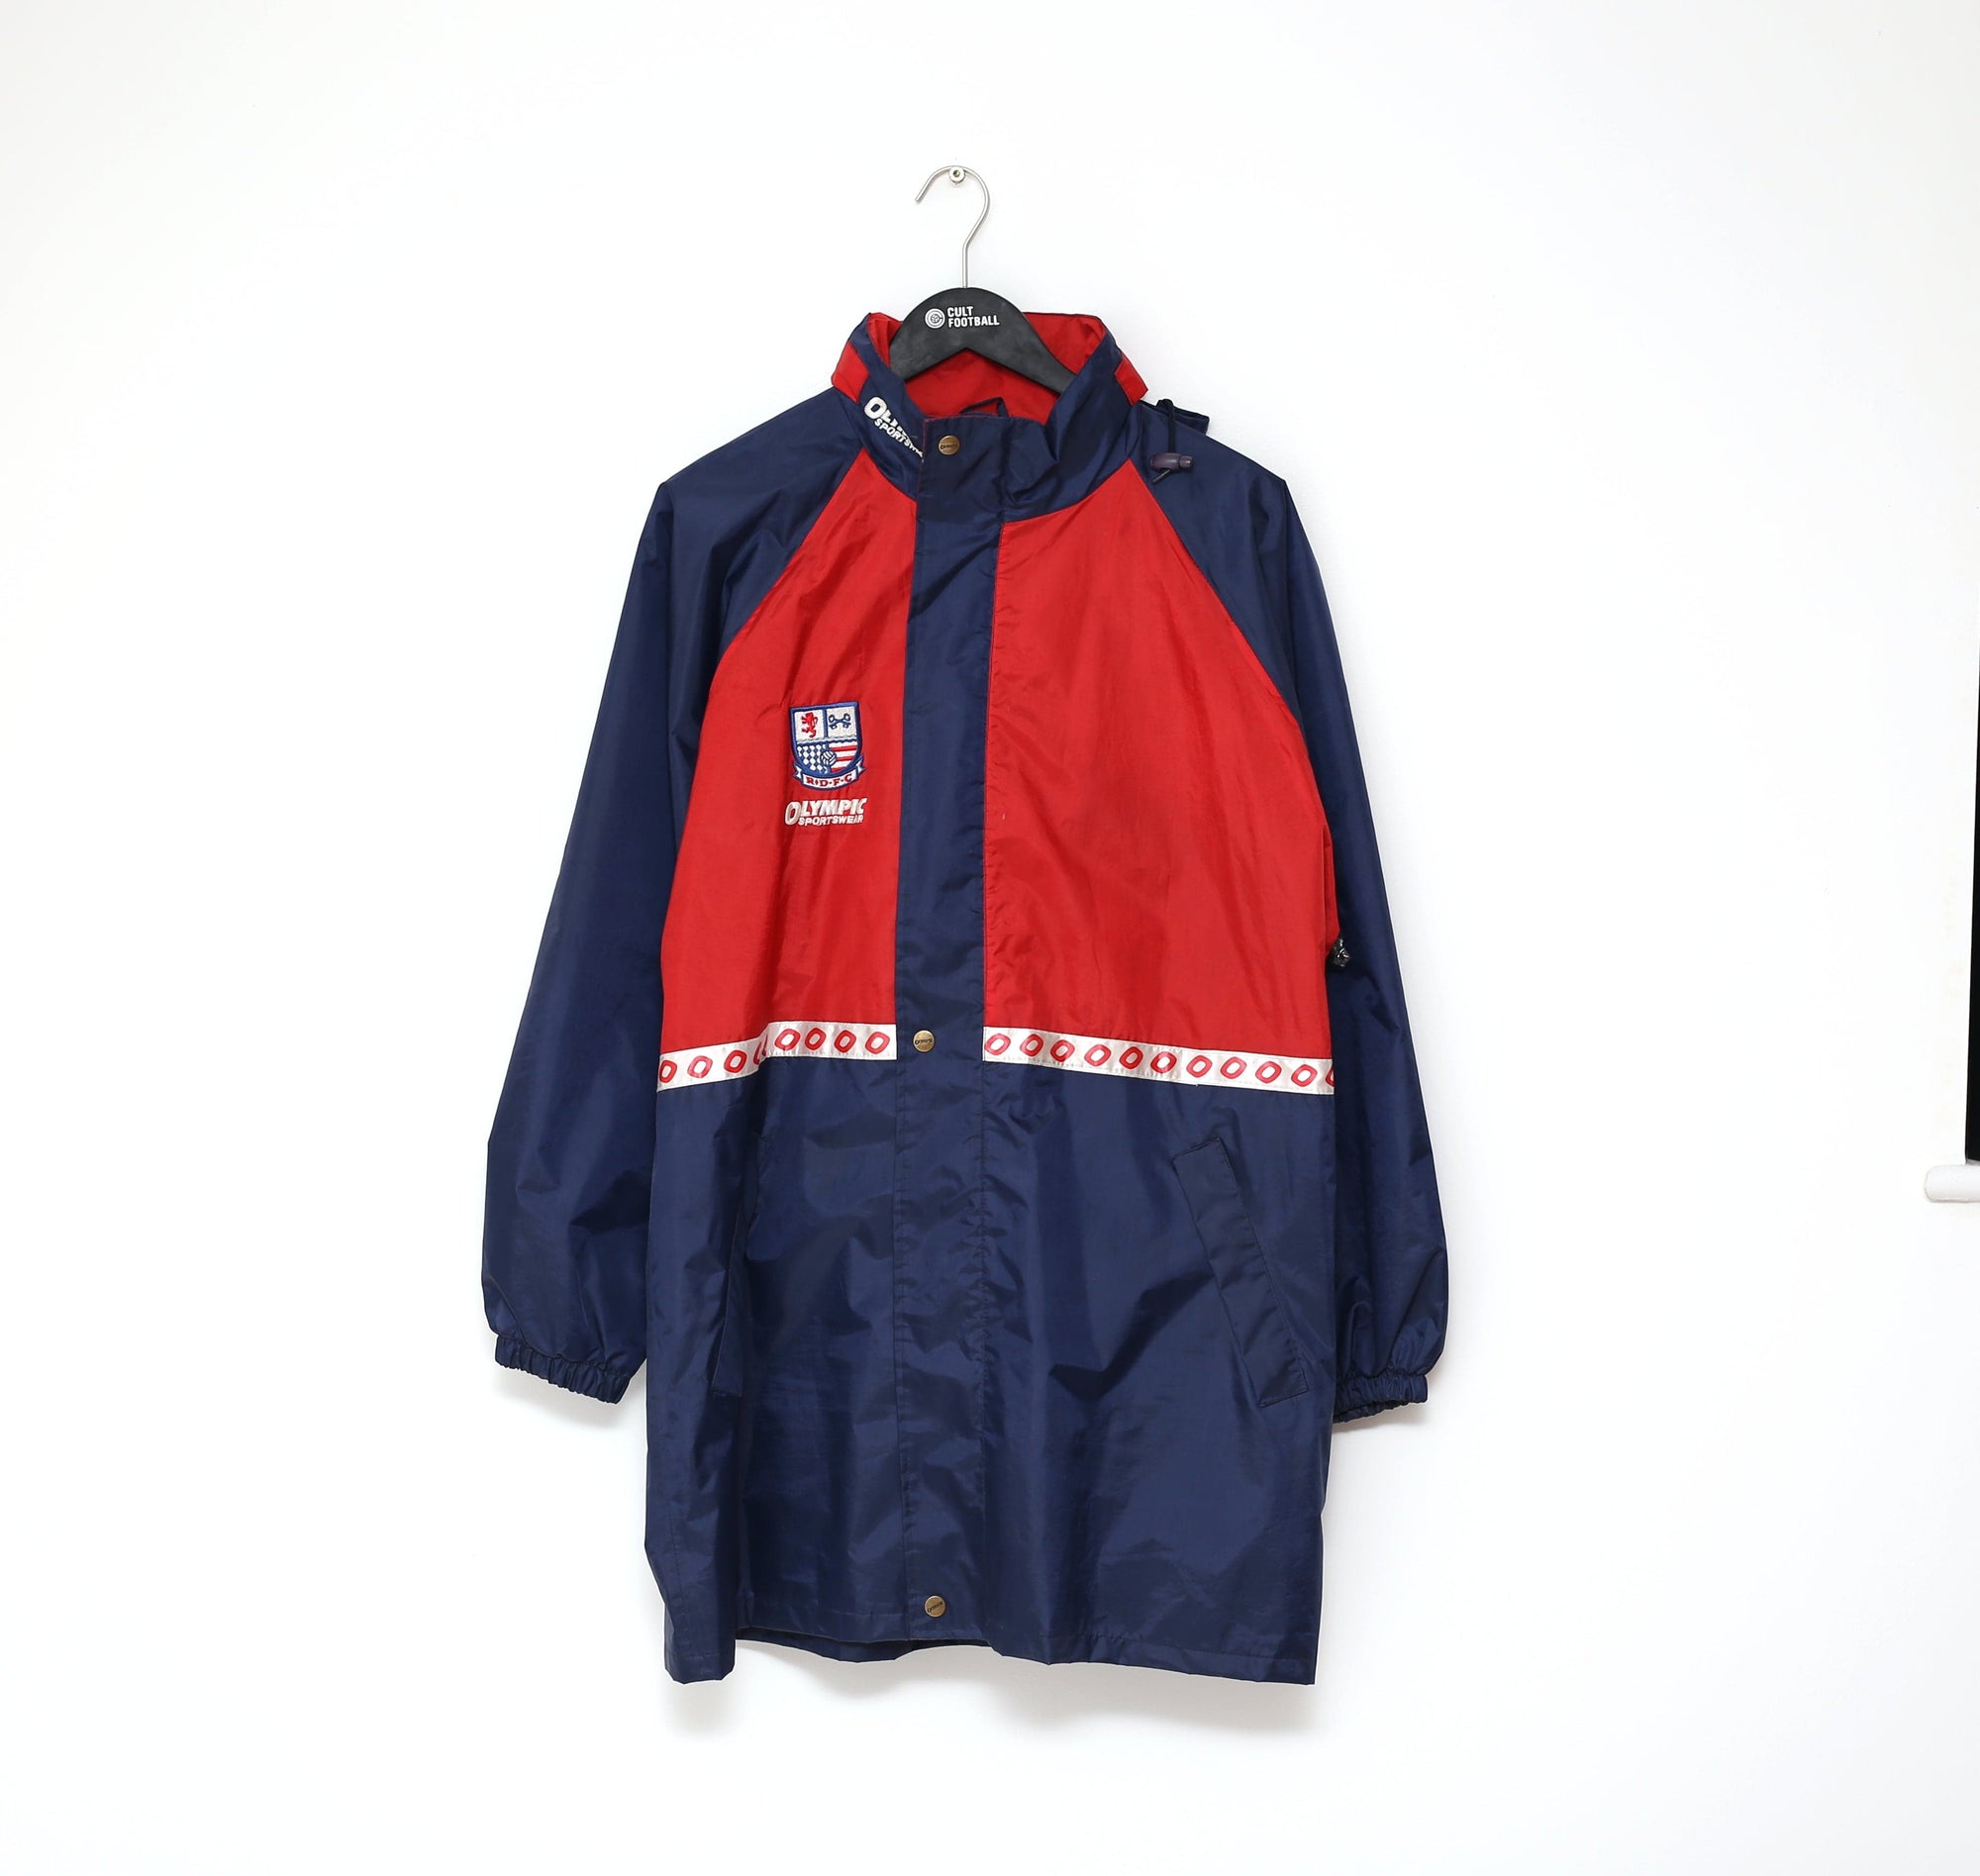 1997/98 RUSHDEN & DIAMONDS Vintage Olympic Football Rain Jacket Coat (S/M)